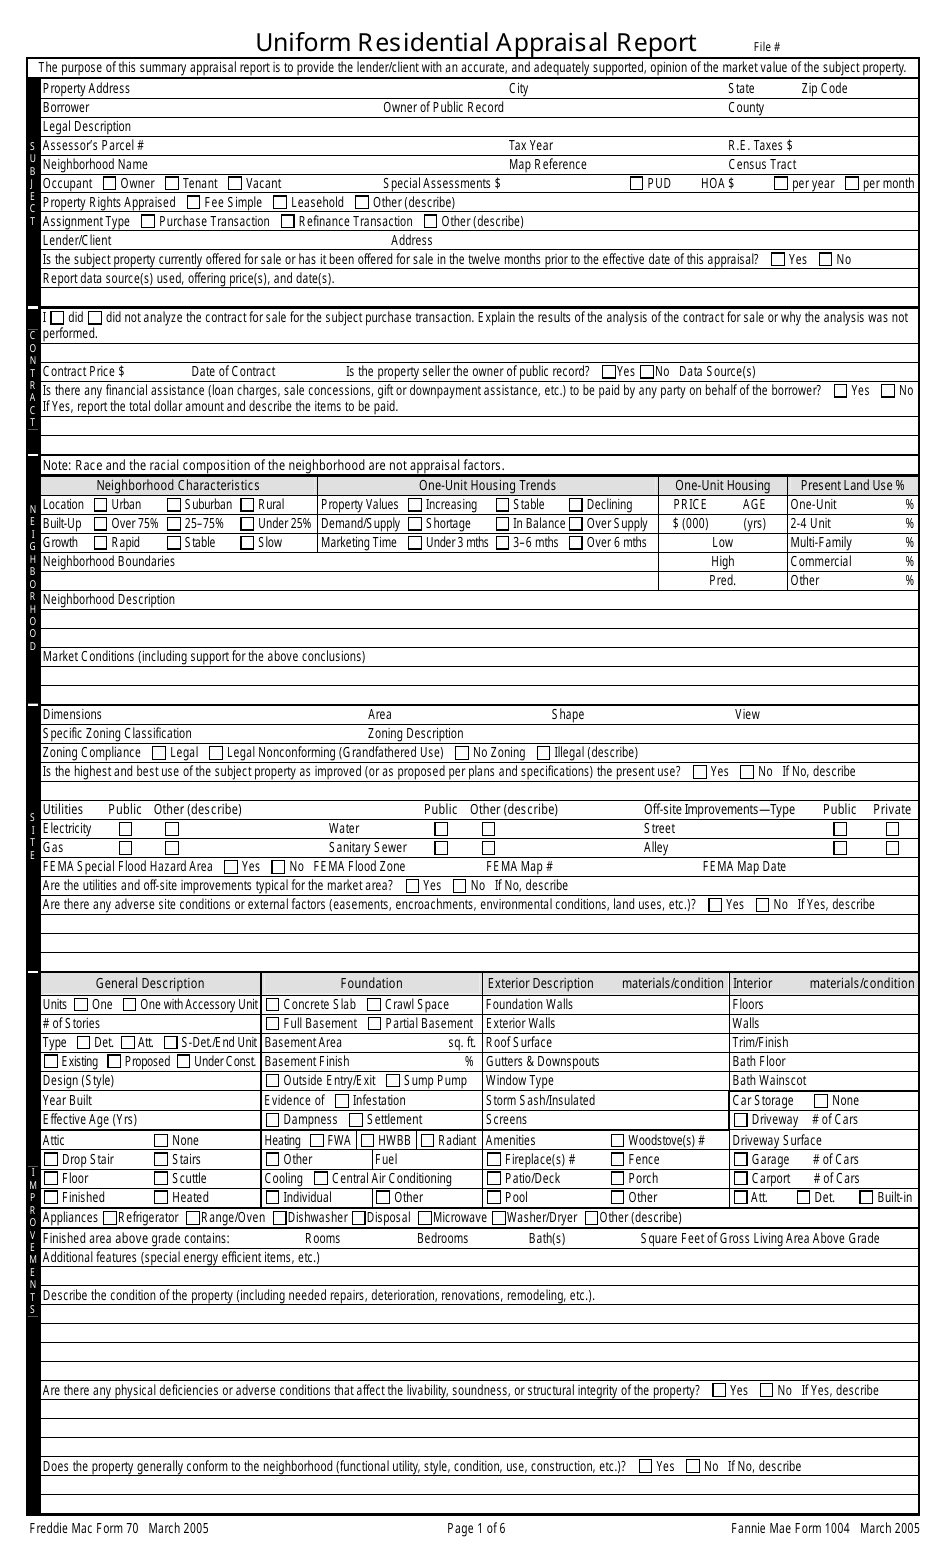 Fannie Mae Form 1004 Uniform Residential Appraisal Report, Page 1